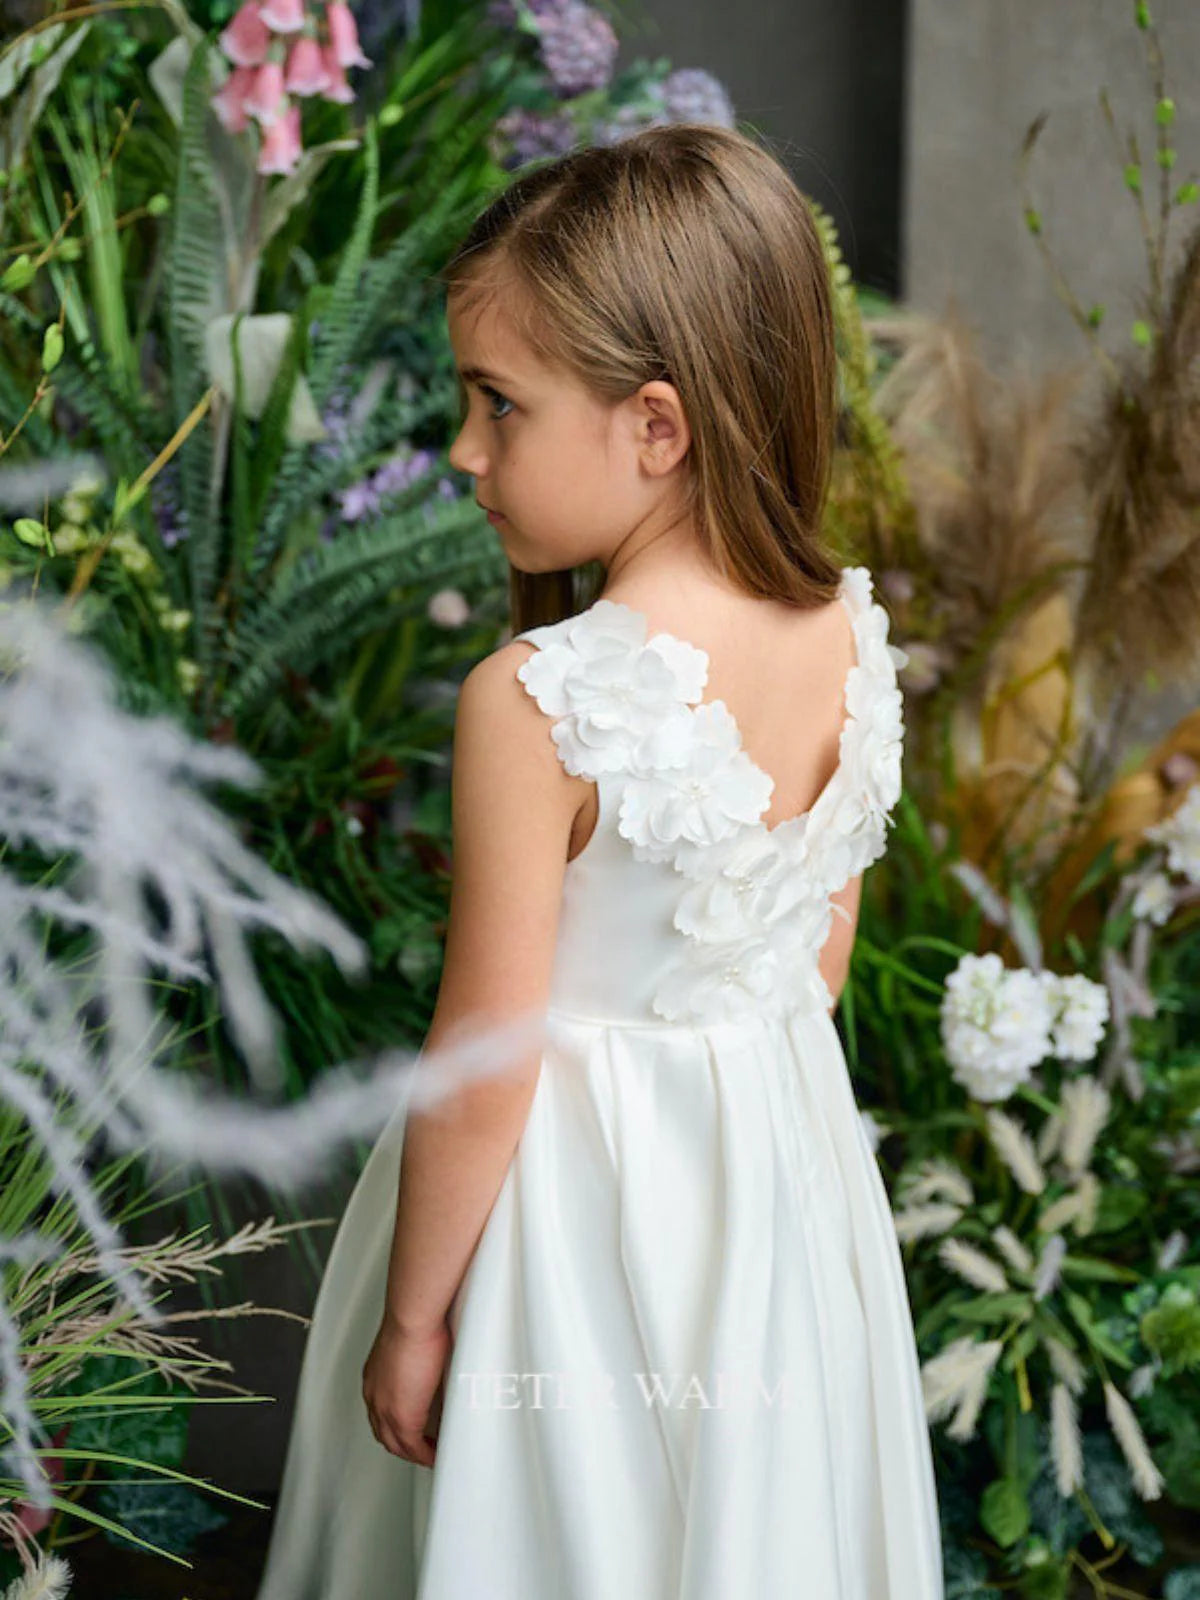 Teter Warm Girl's Off White Satin Flower Girl Dress - Janie  (Size 2, 3, 4, 5)